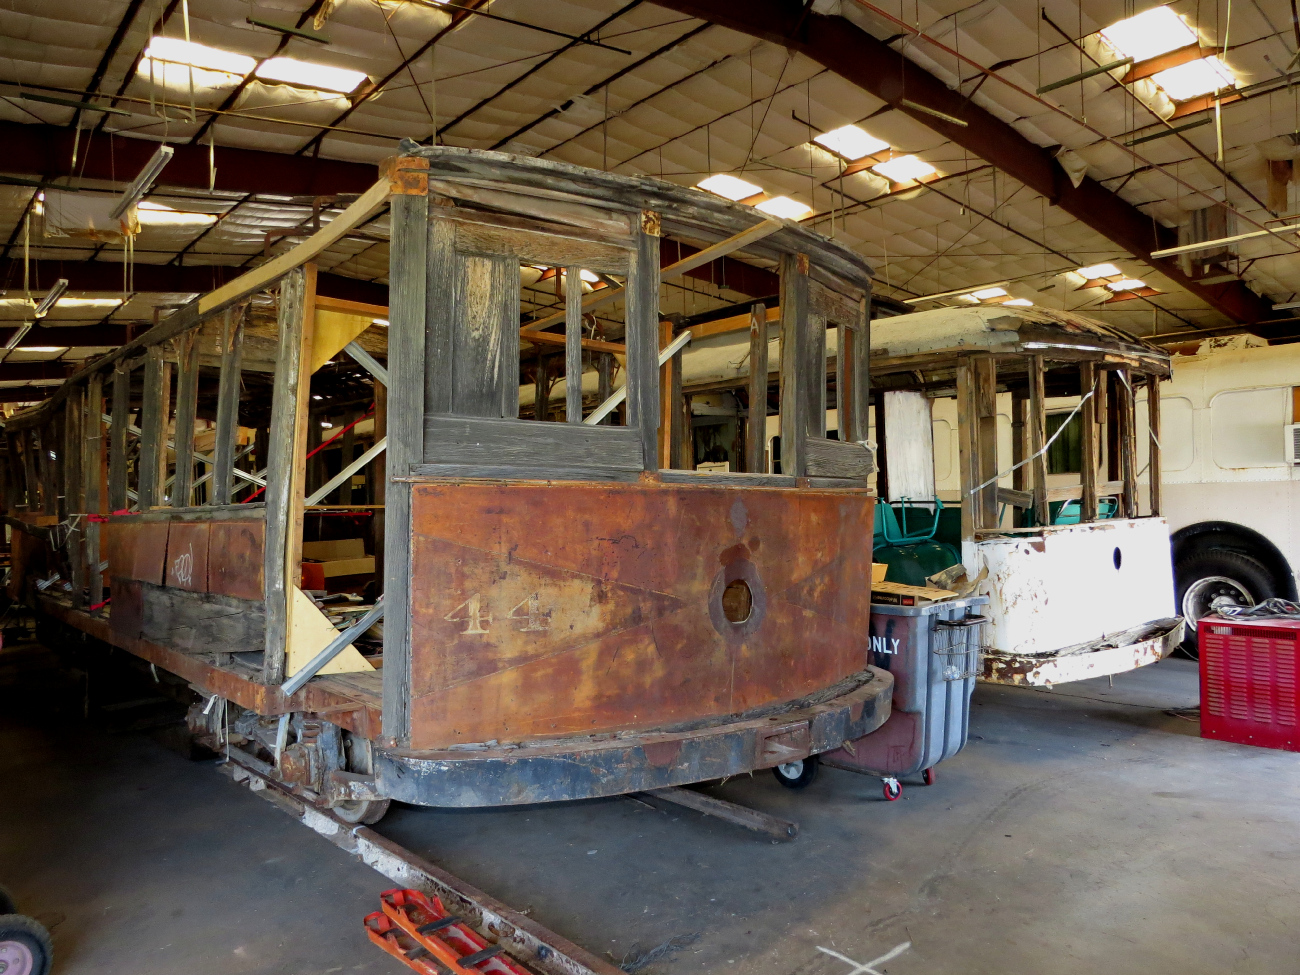 Tucson, American Car Company N°. 44; Tucson — Old Pueblo Trolley Collection